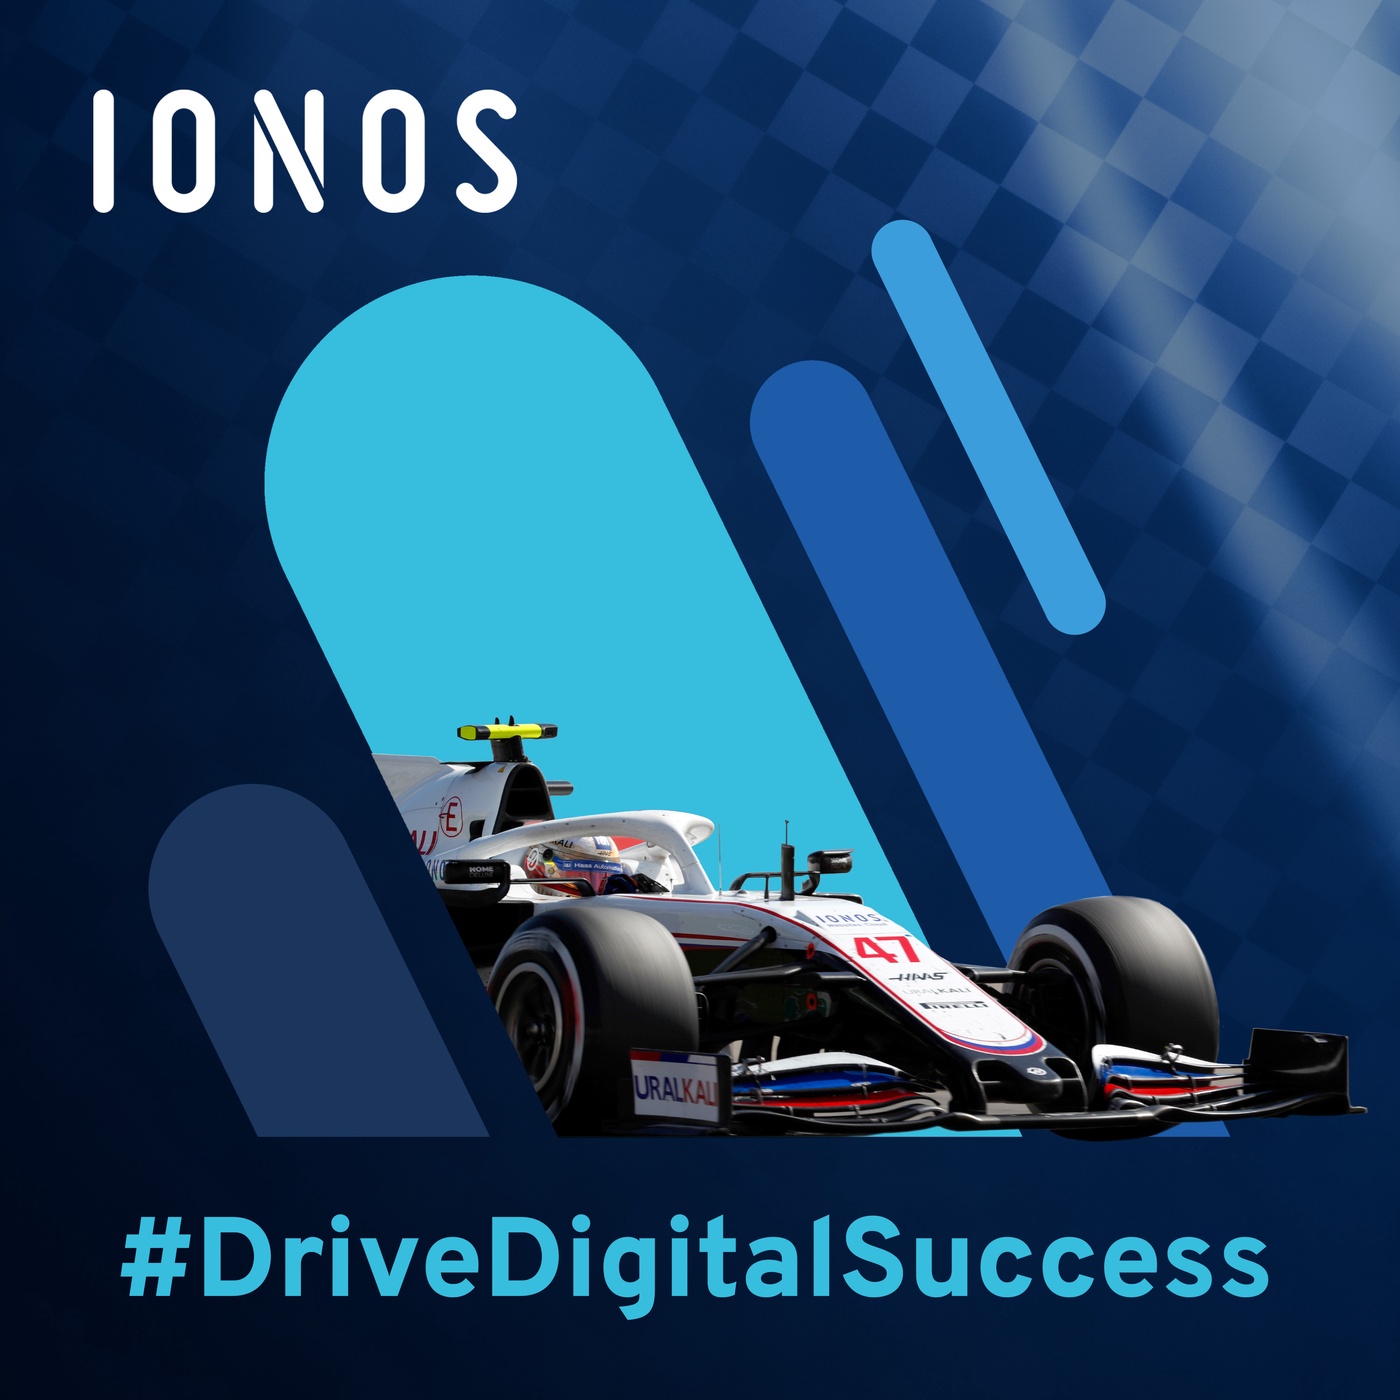 It’s all about data | #drivedigitalsuccess #5